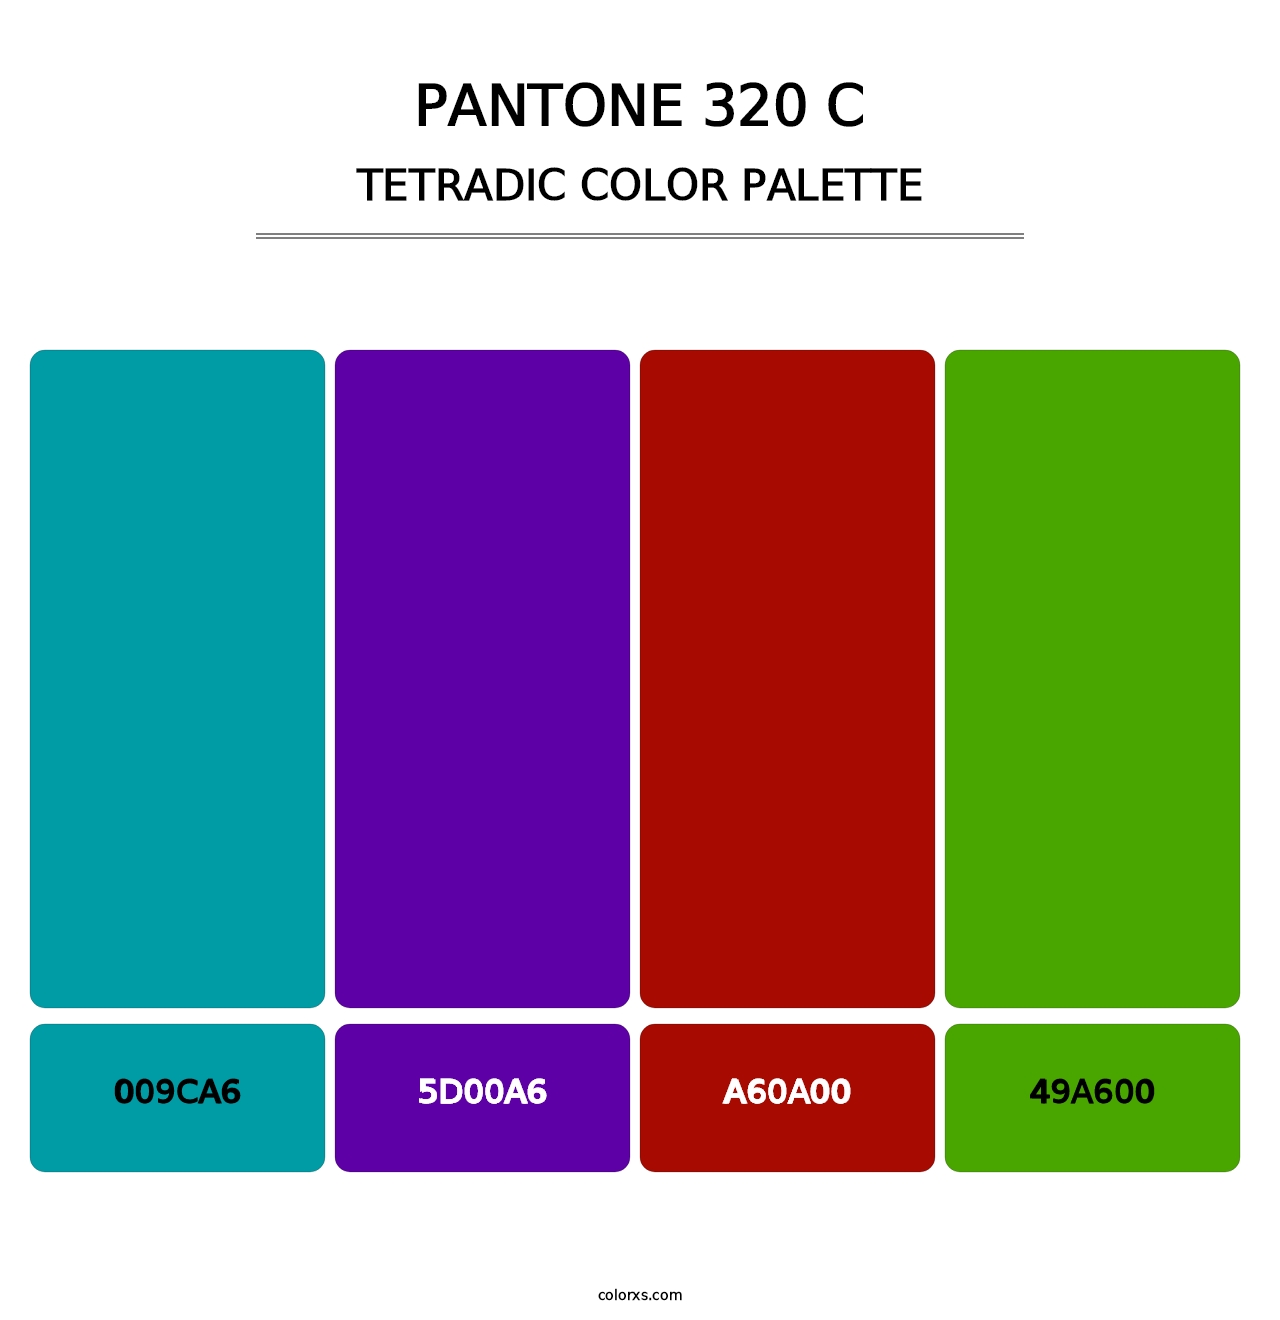 PANTONE 320 C - Tetradic Color Palette